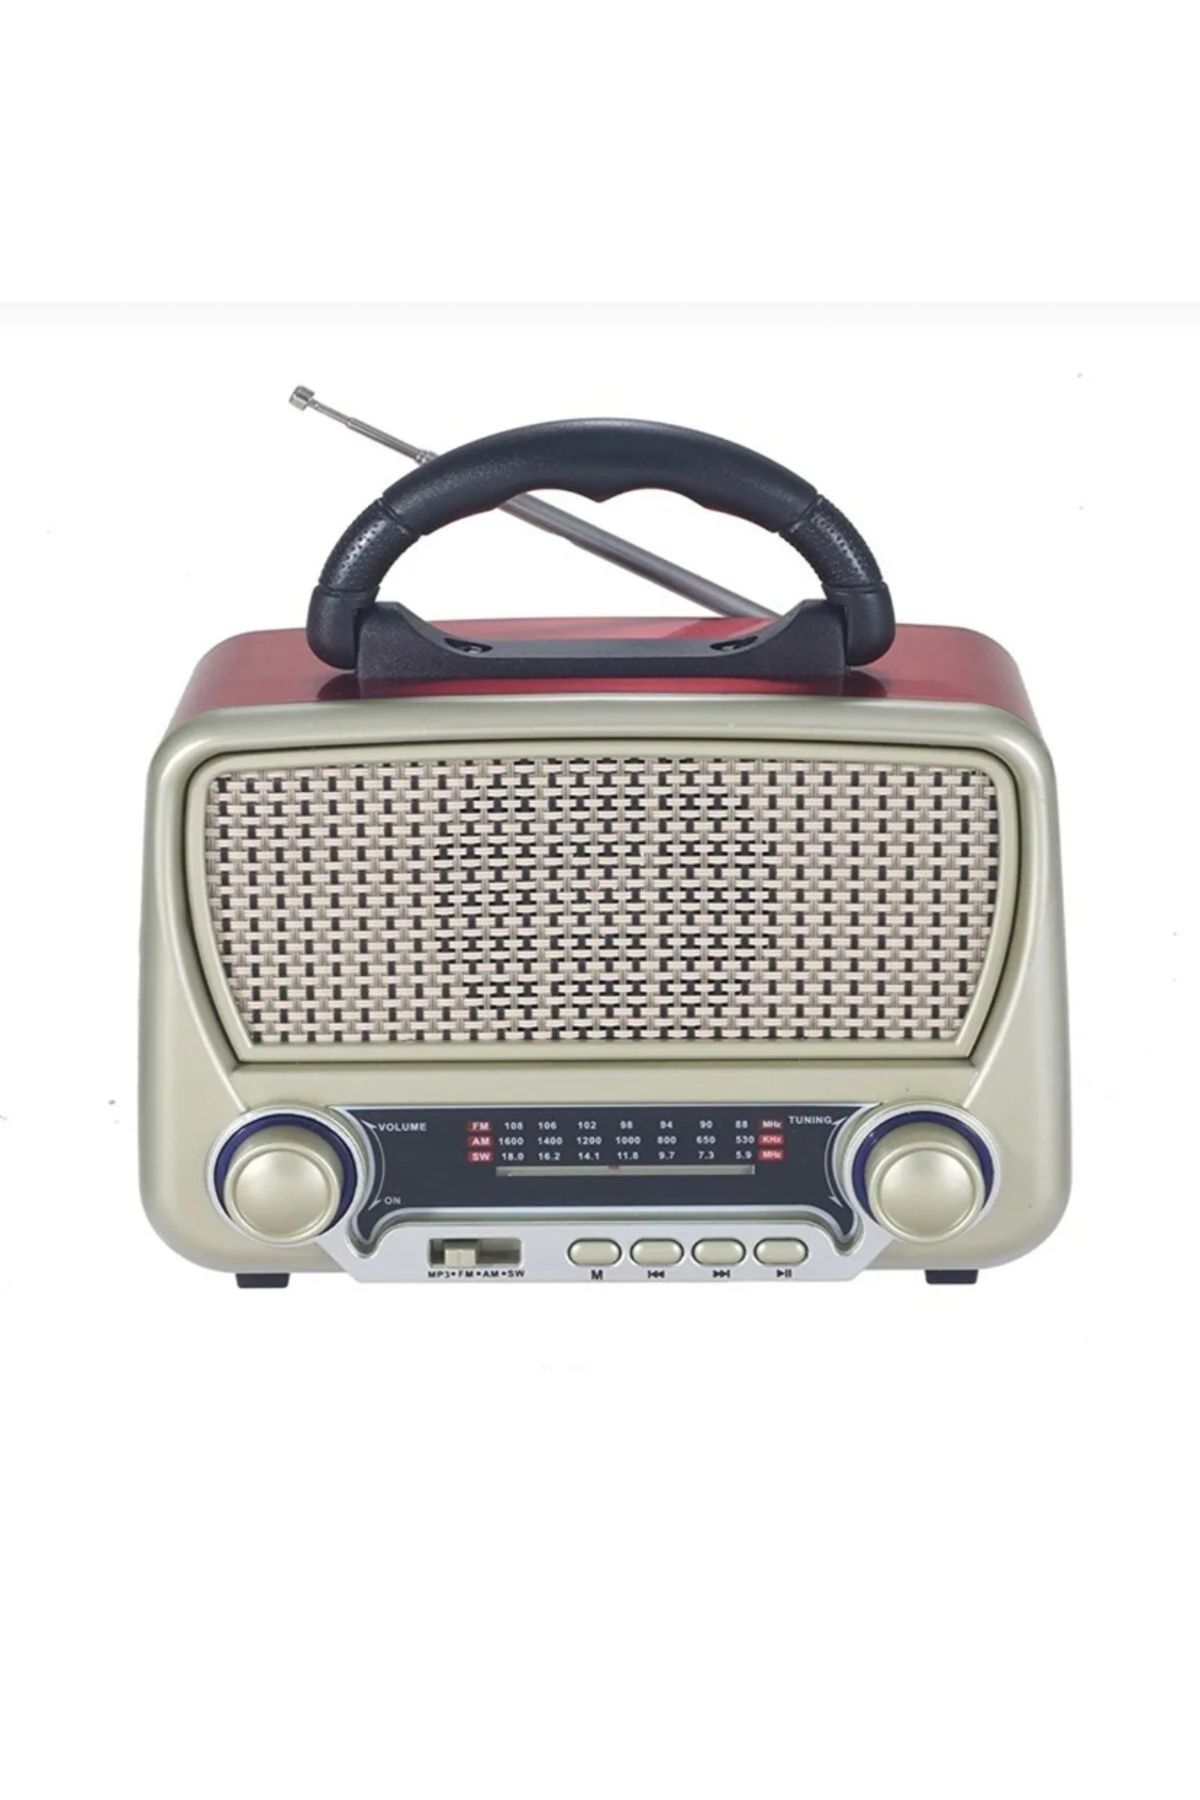 Cannavaro ULVİLA CM-303 Bt Nostaljik Radyo Bluetooth + Fener + Usb + Sd Card Mp3 Radyo Çalar